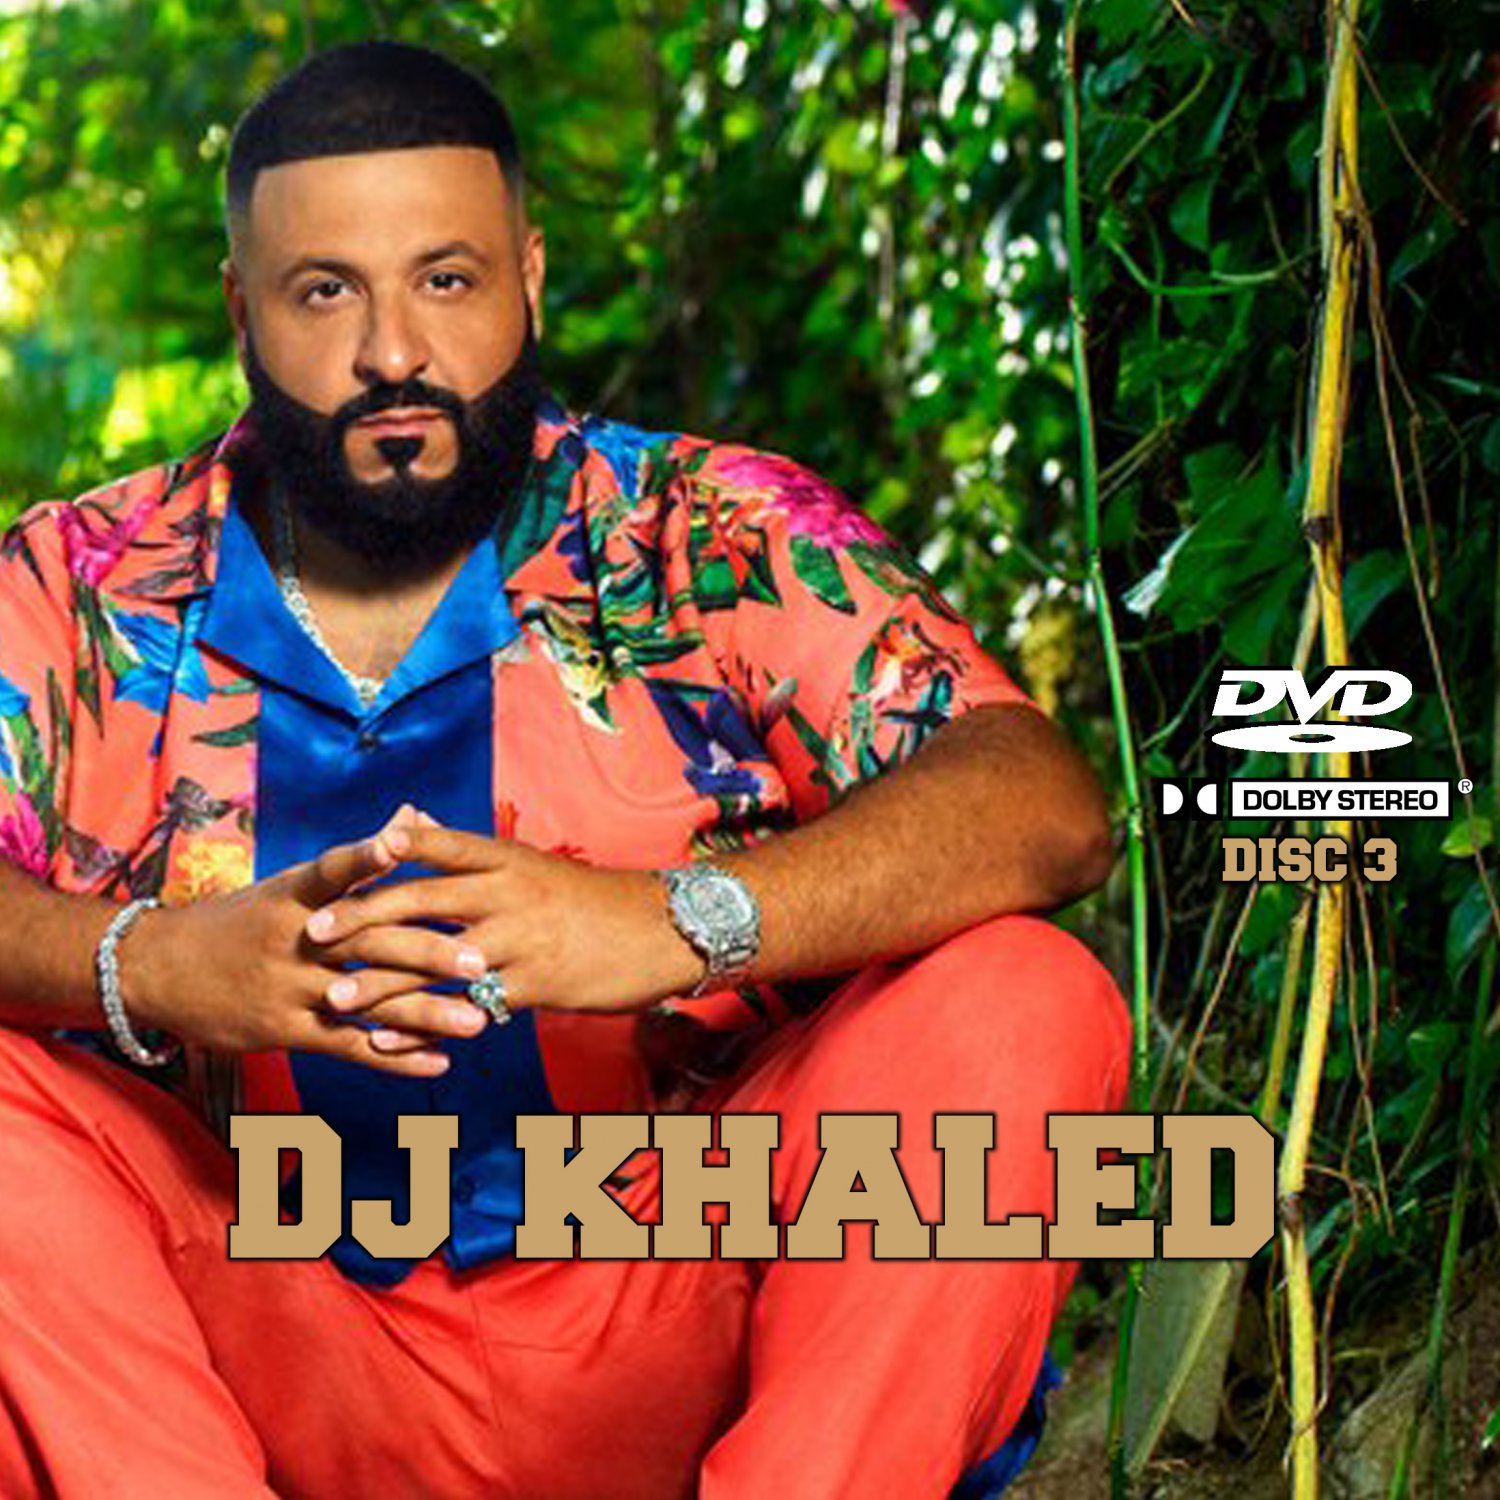 DJ Khaled Music Videos Collection (3 DVD's) 57 Music Videos